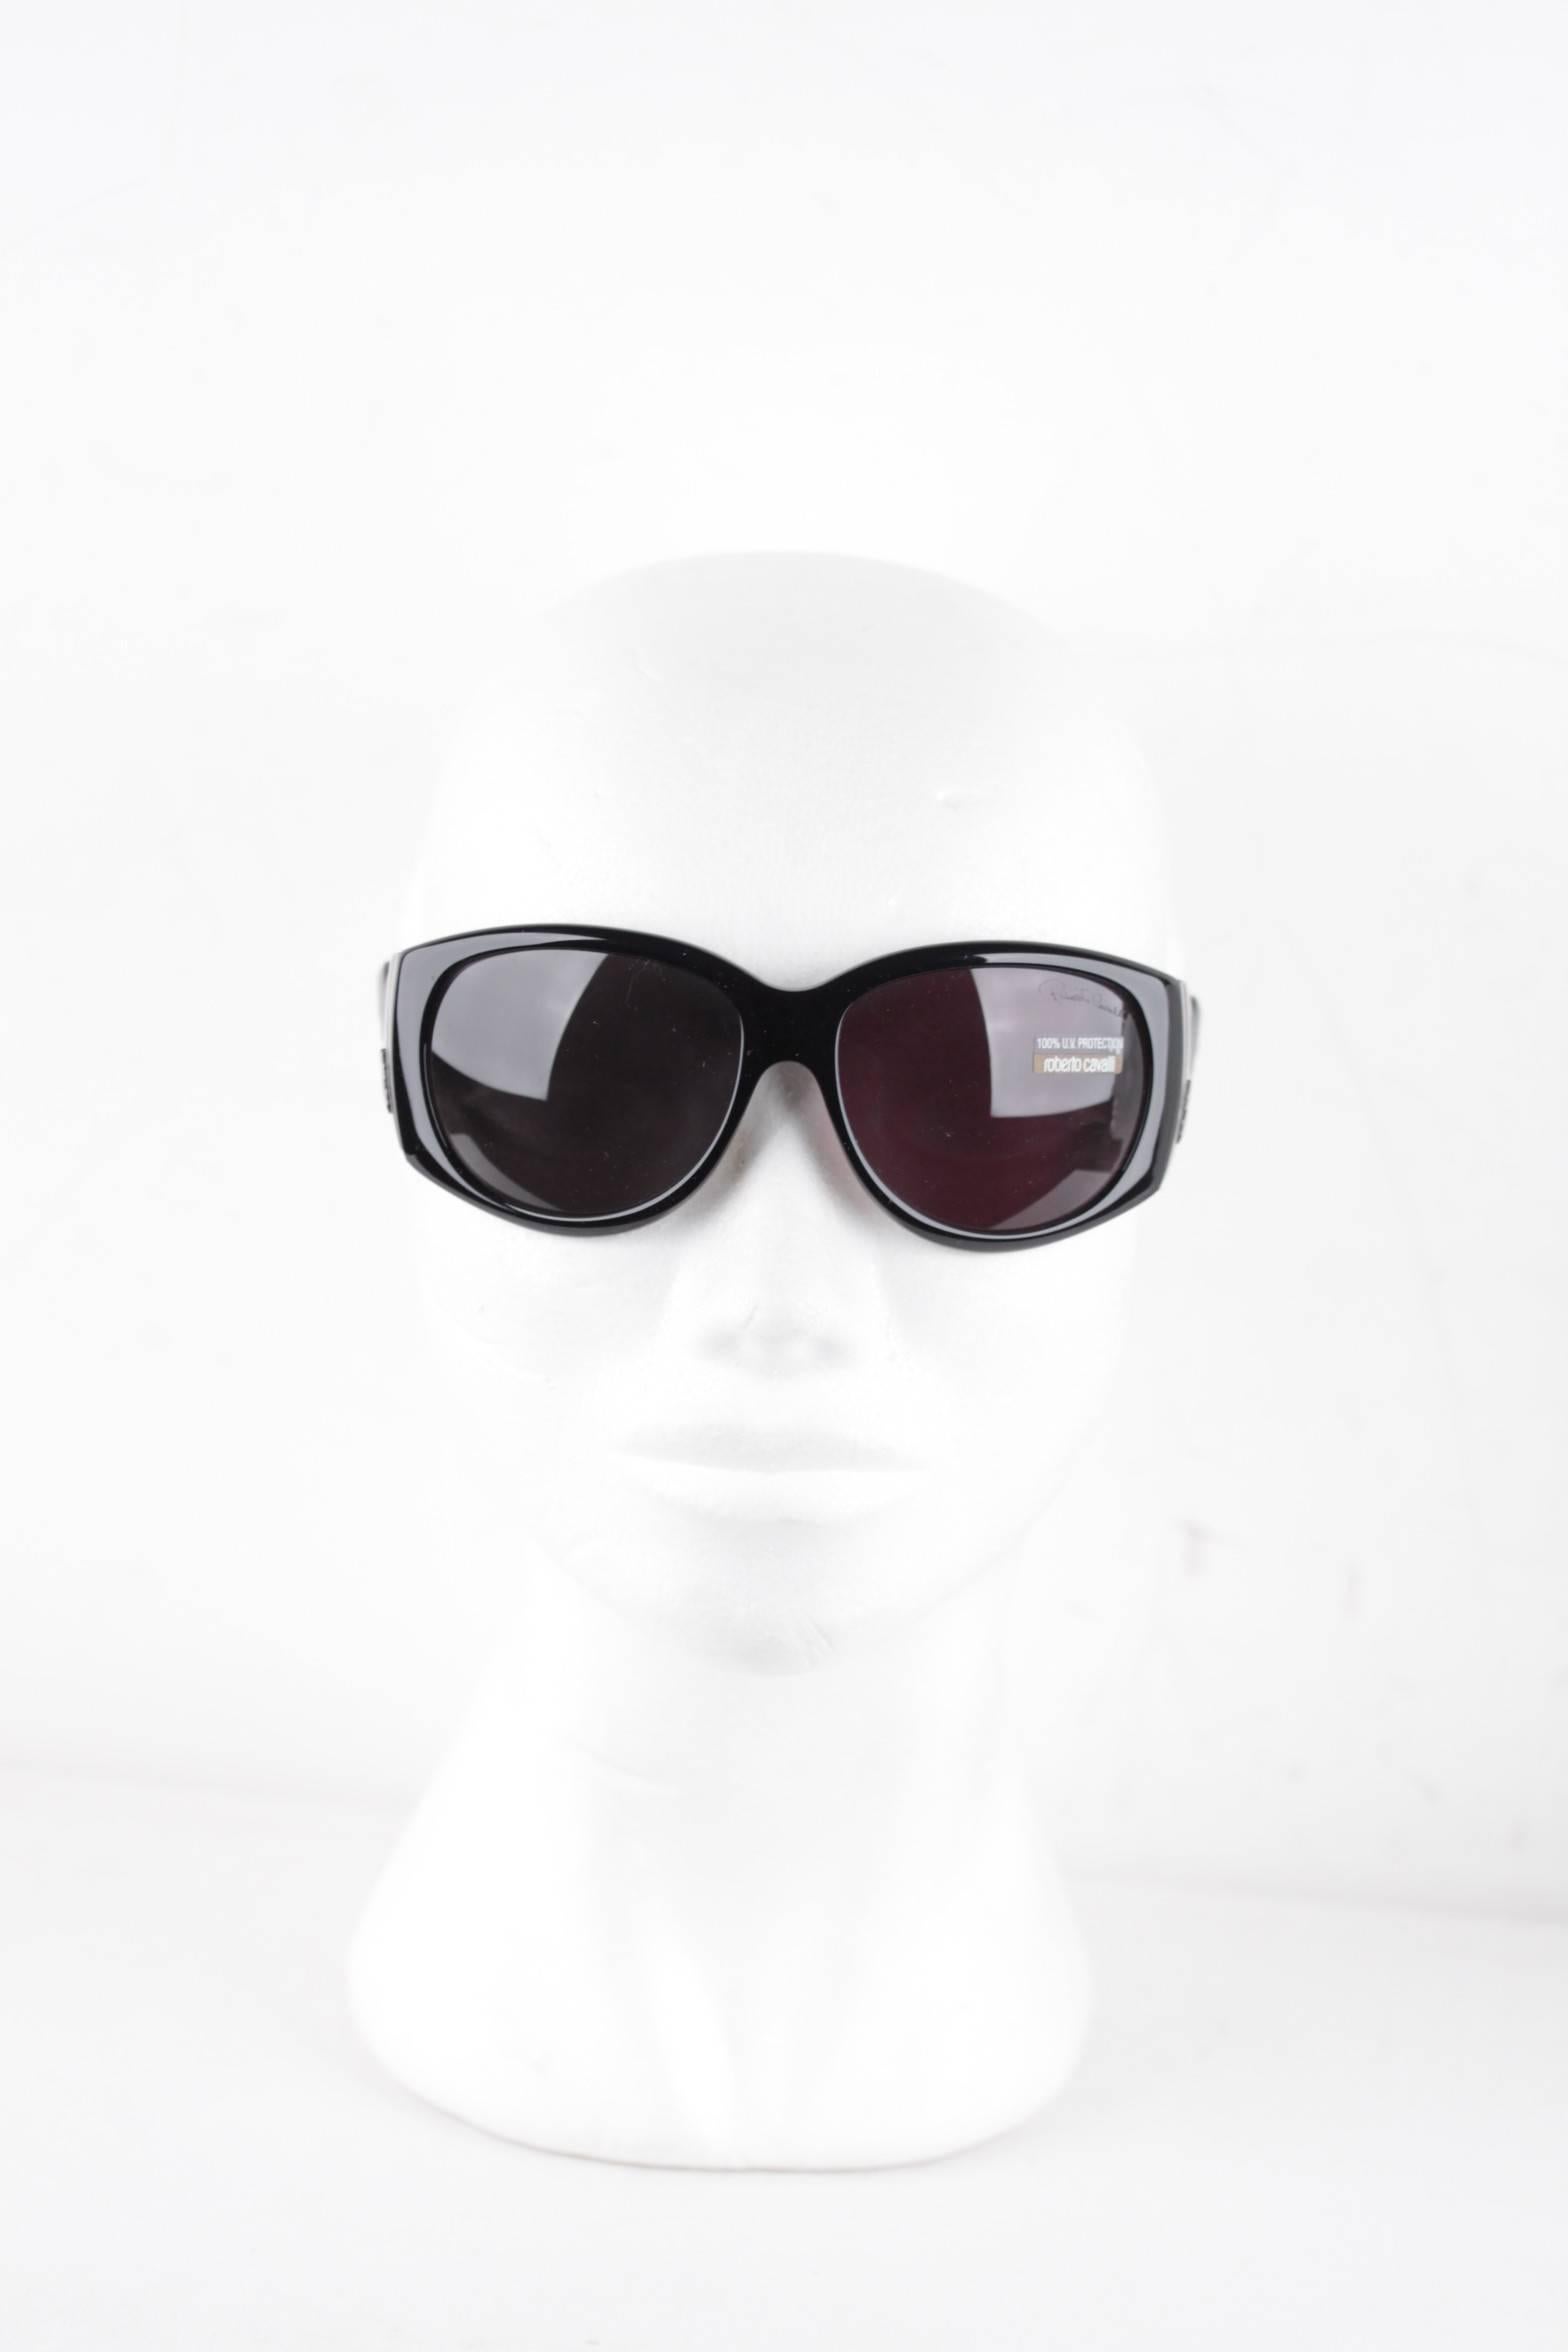 Gray ROBERTO CAVALLI black/gray sunglasses mod. CARITE 288S B5 59/15 130 eyewear